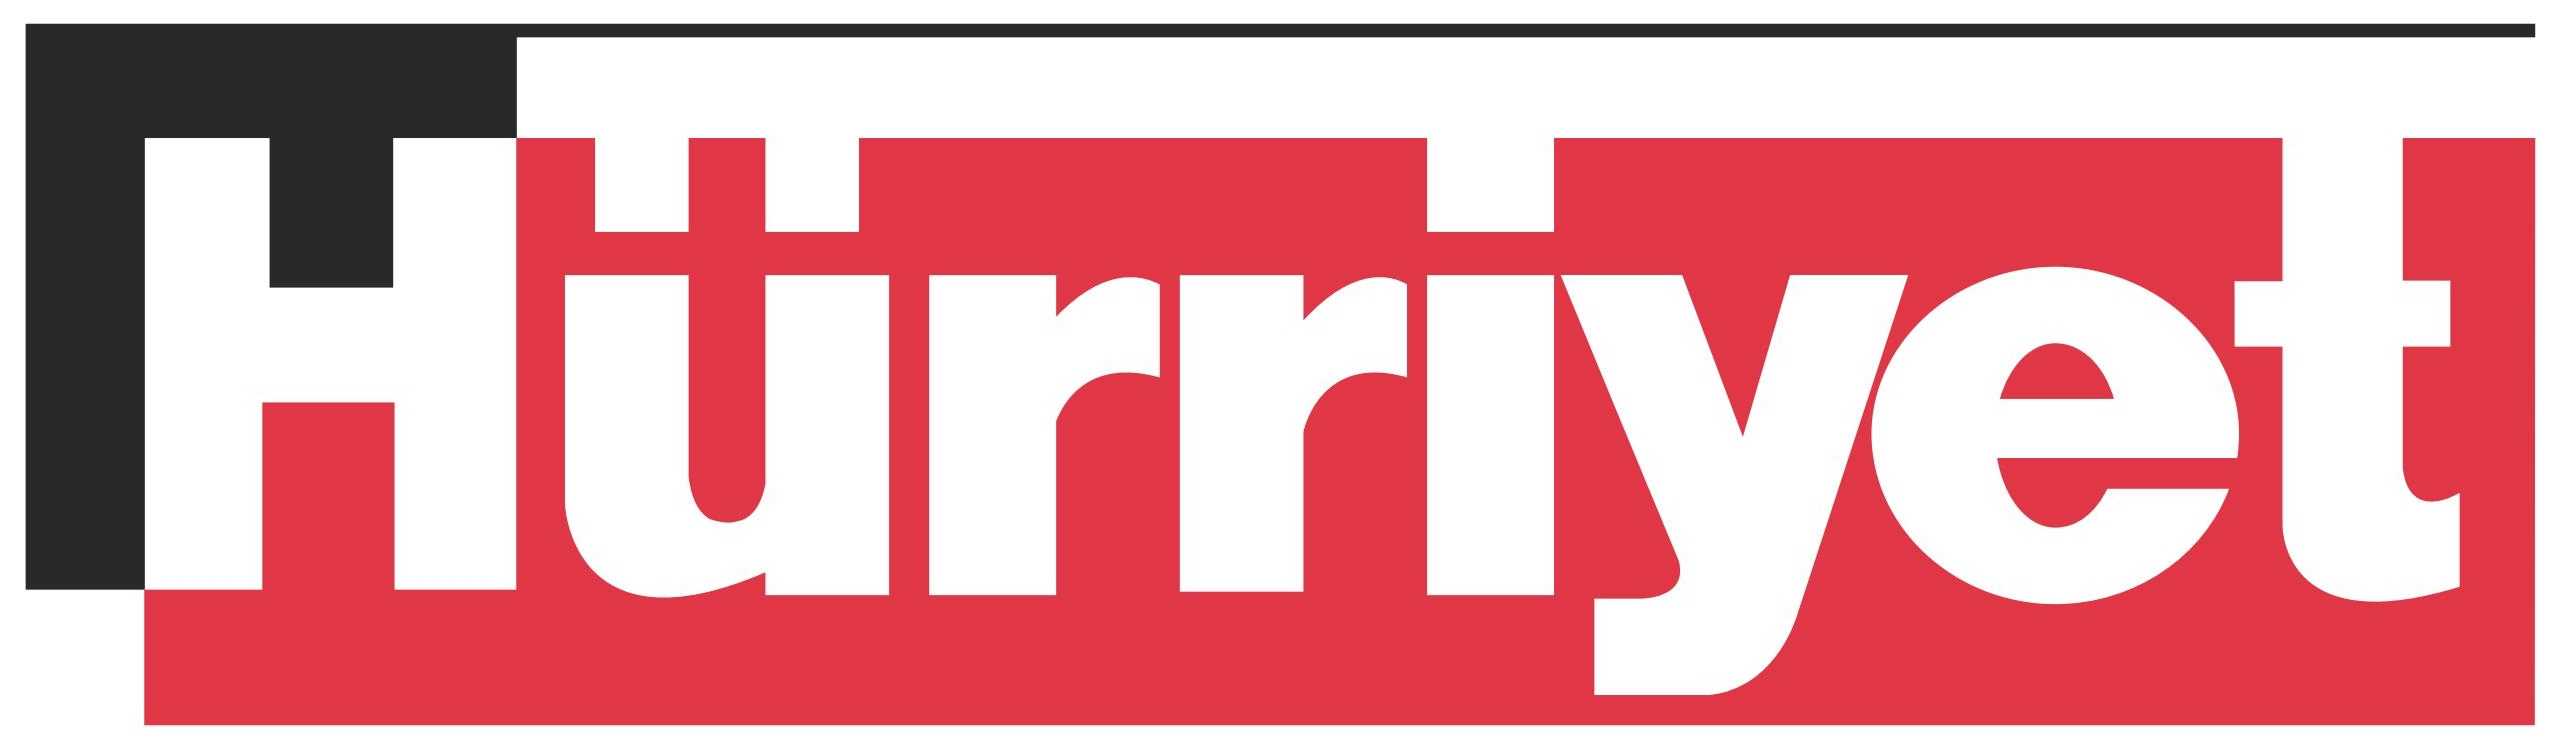 hurriyet-gazetesi-logo